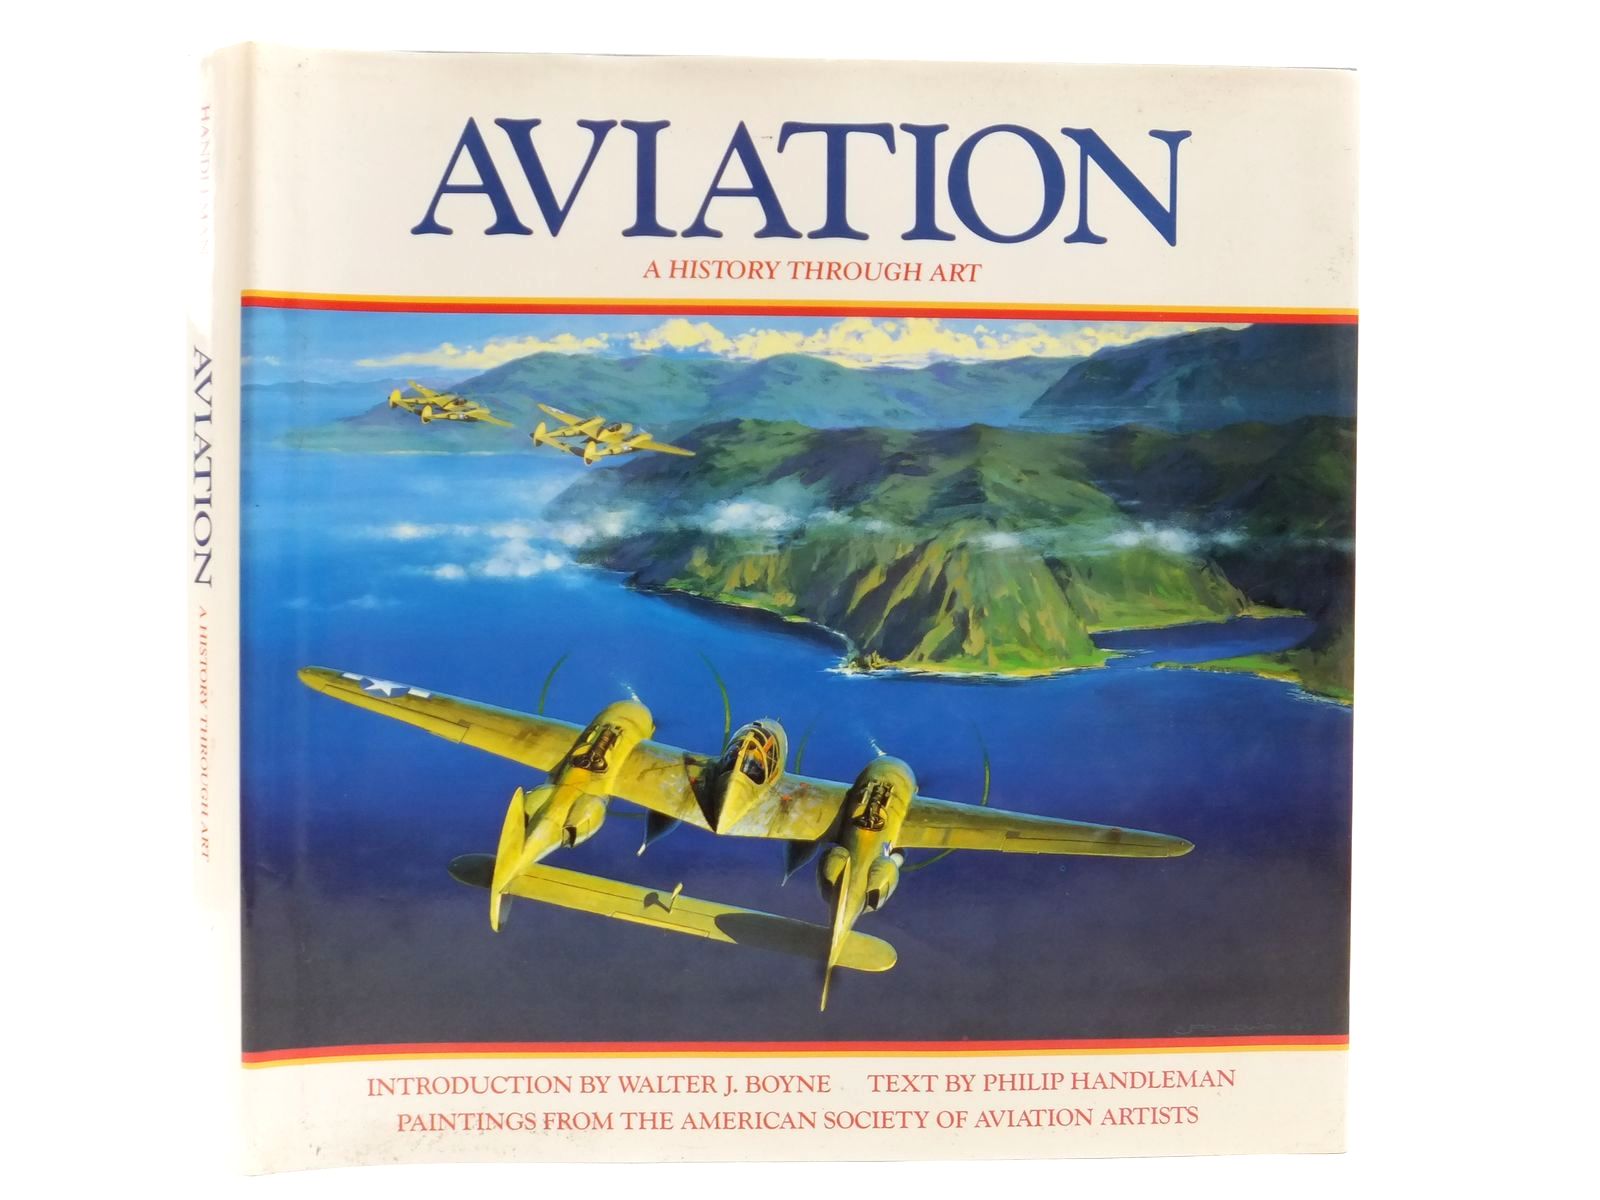 Aviation перевод. История авиации. Книги про авиацию. The best Aviation books. History of Aviation перевод.